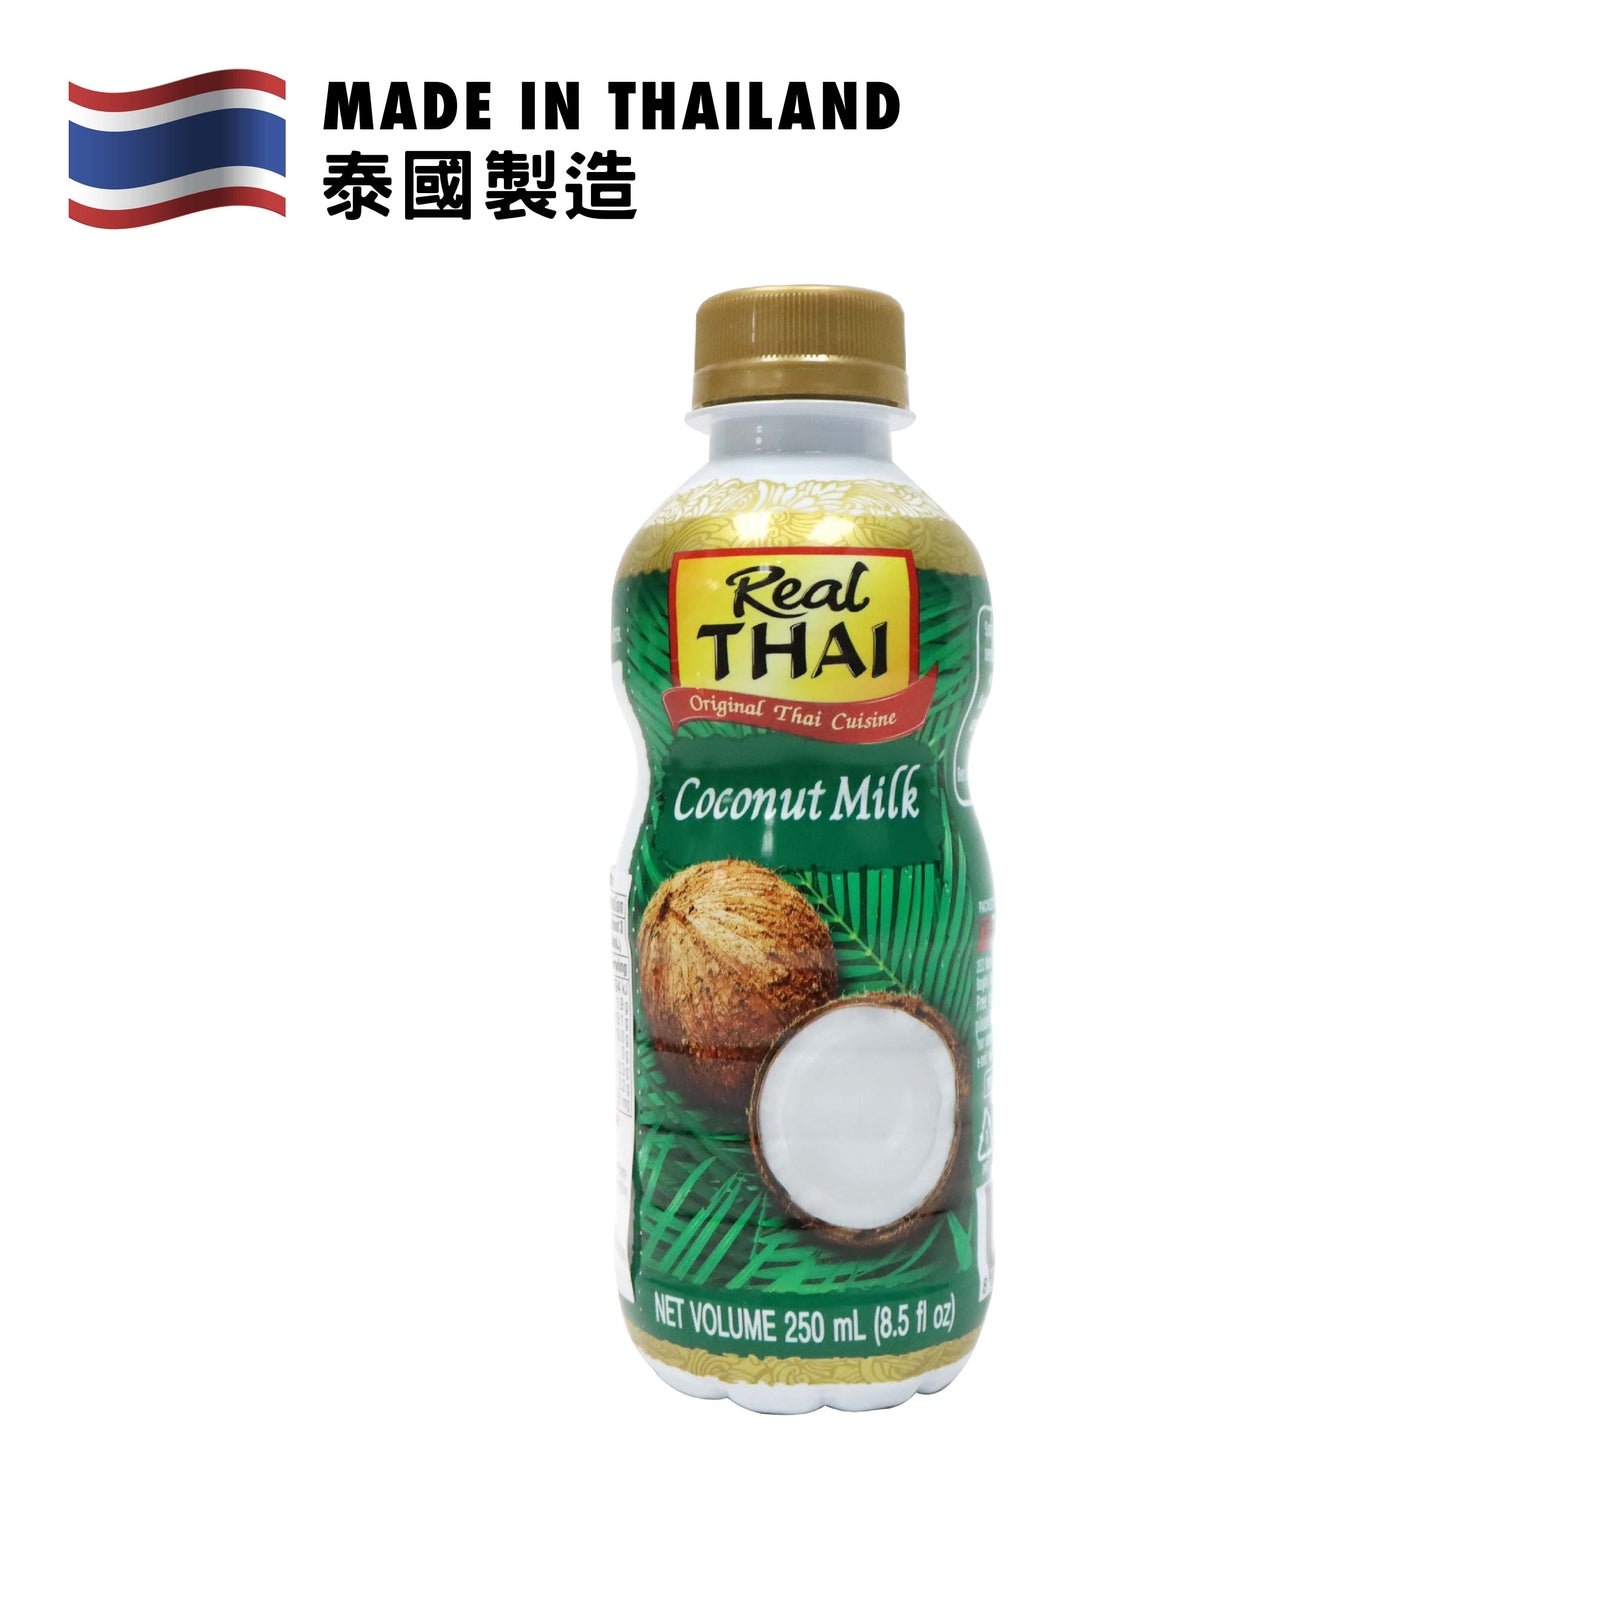 Real Thai Coconut Milk (PET bottle) 250ml